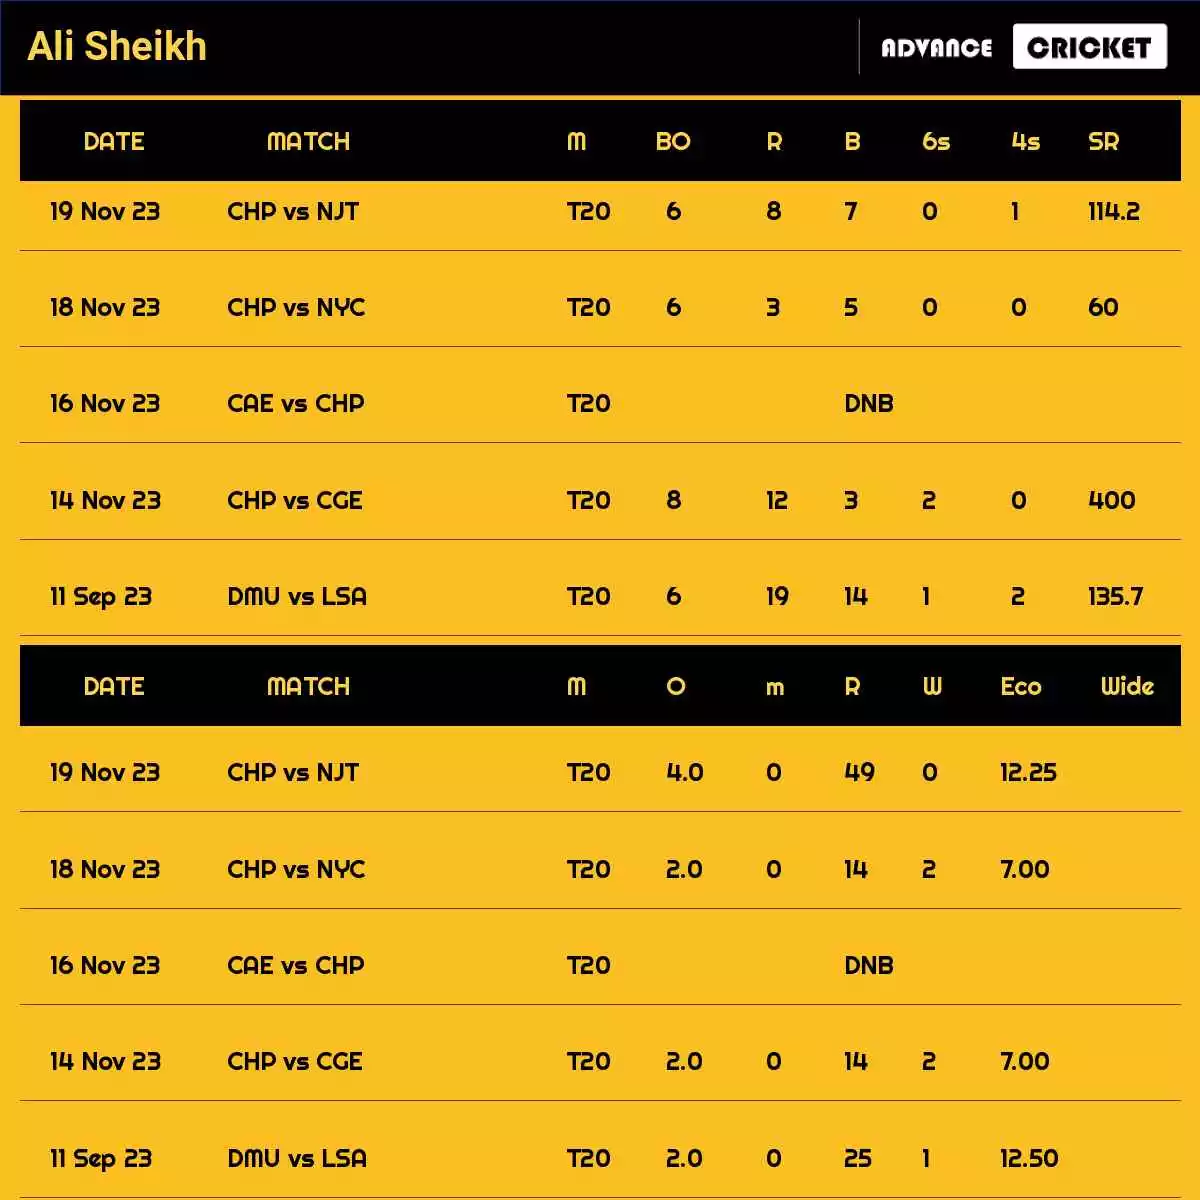 Ali Sheikh Recent Matches Details Date Wise